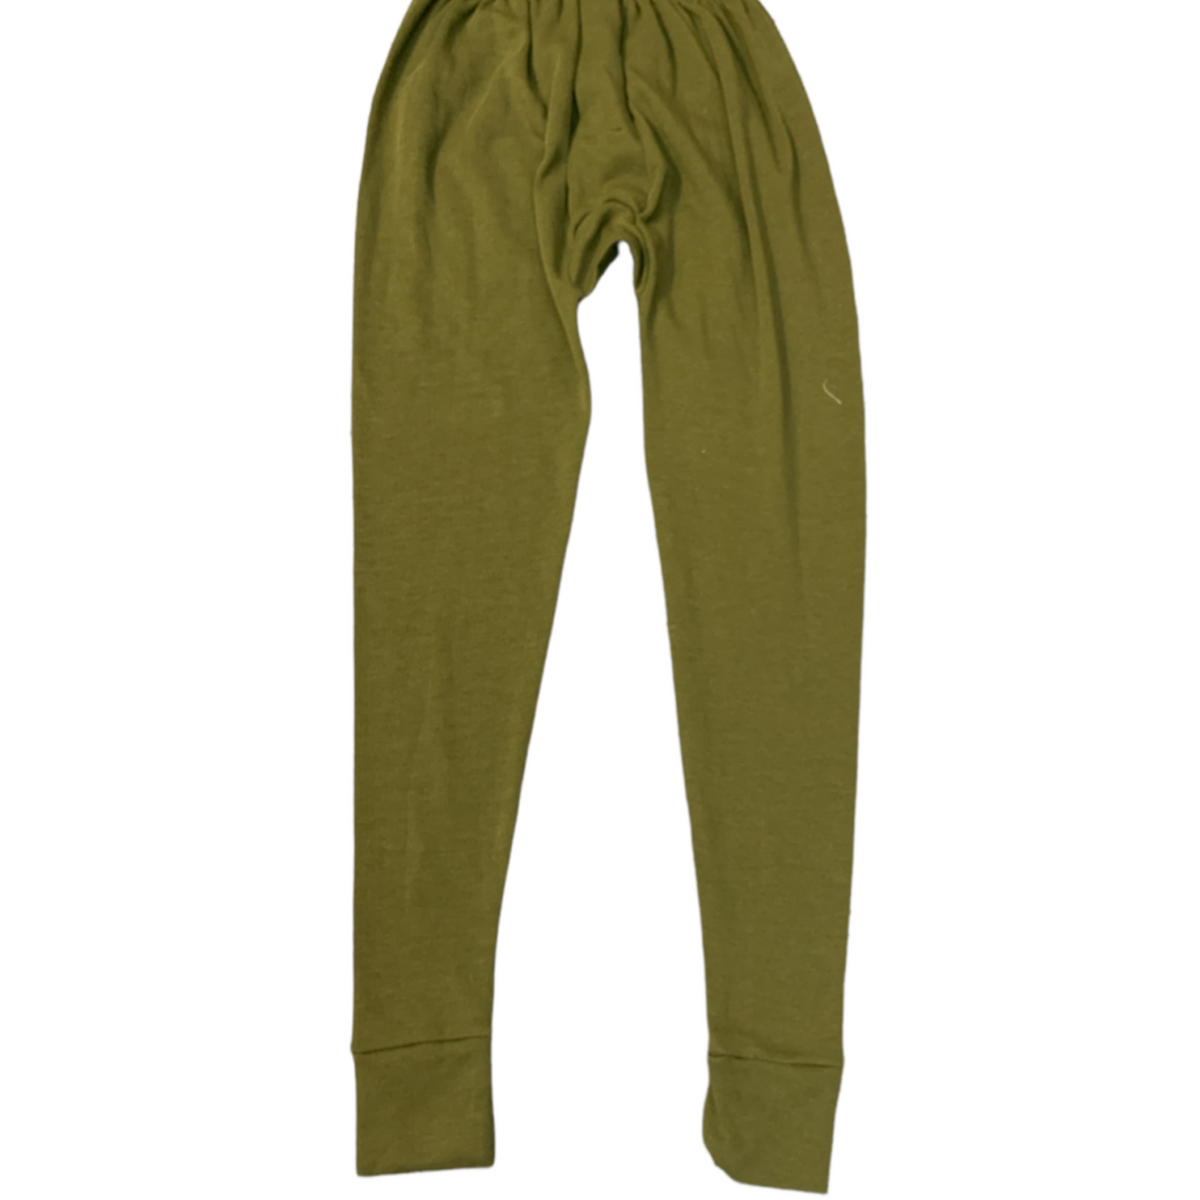 British Military PCS Drawers Thermal Underwear - Light Olive